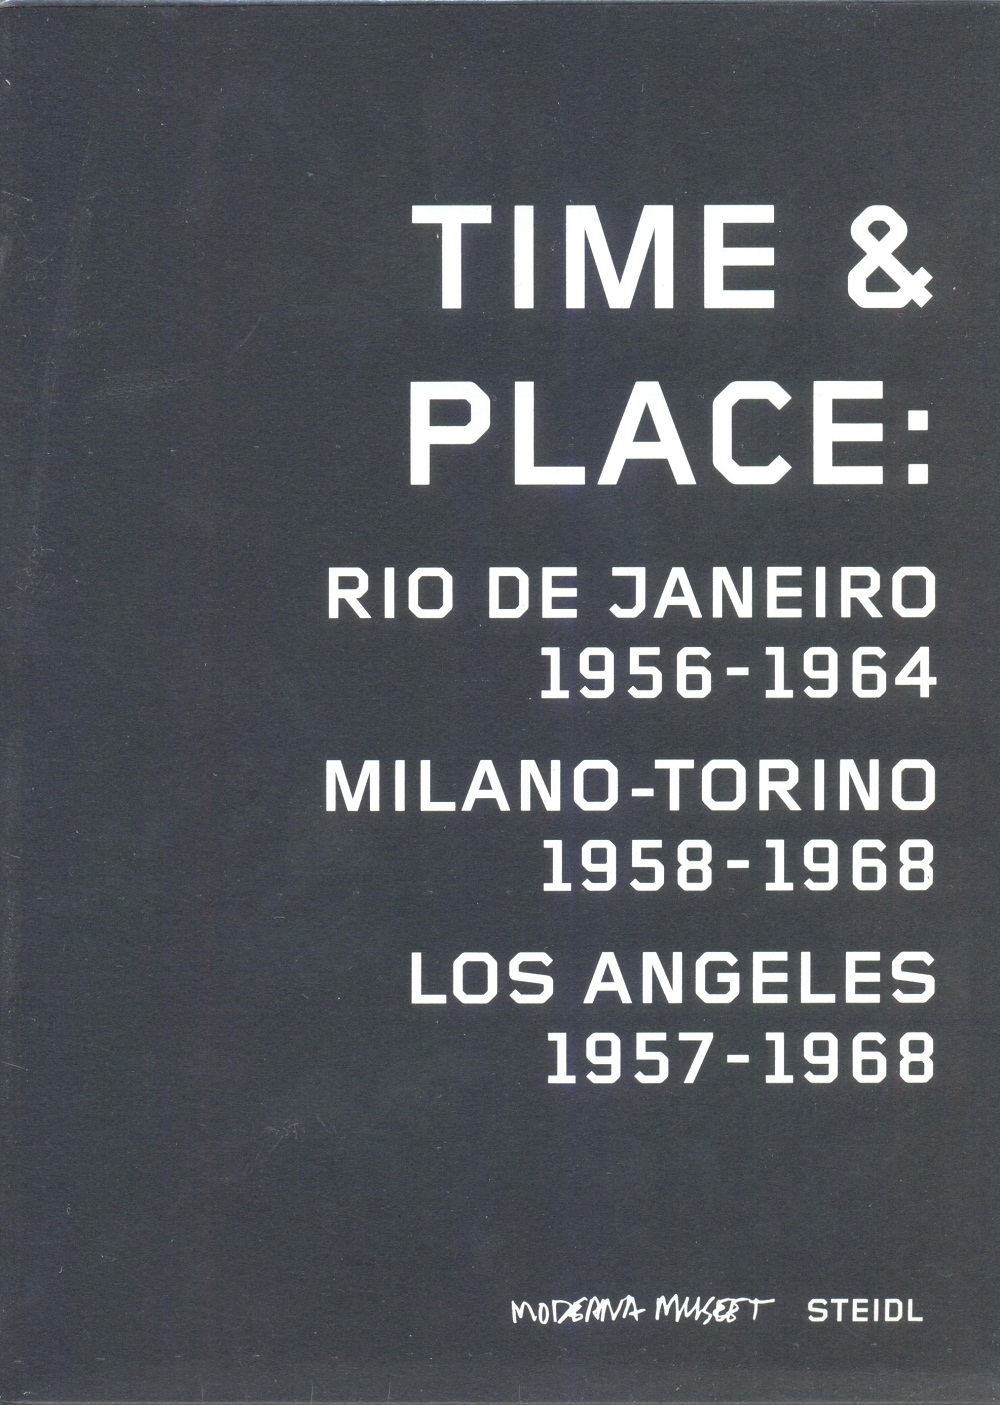 Time & Place: Rio de Janeiro 1956-1964/Milano-Torino 1958-1968/Los Angeles 1957-1968 1956-1964/Milano-Torino